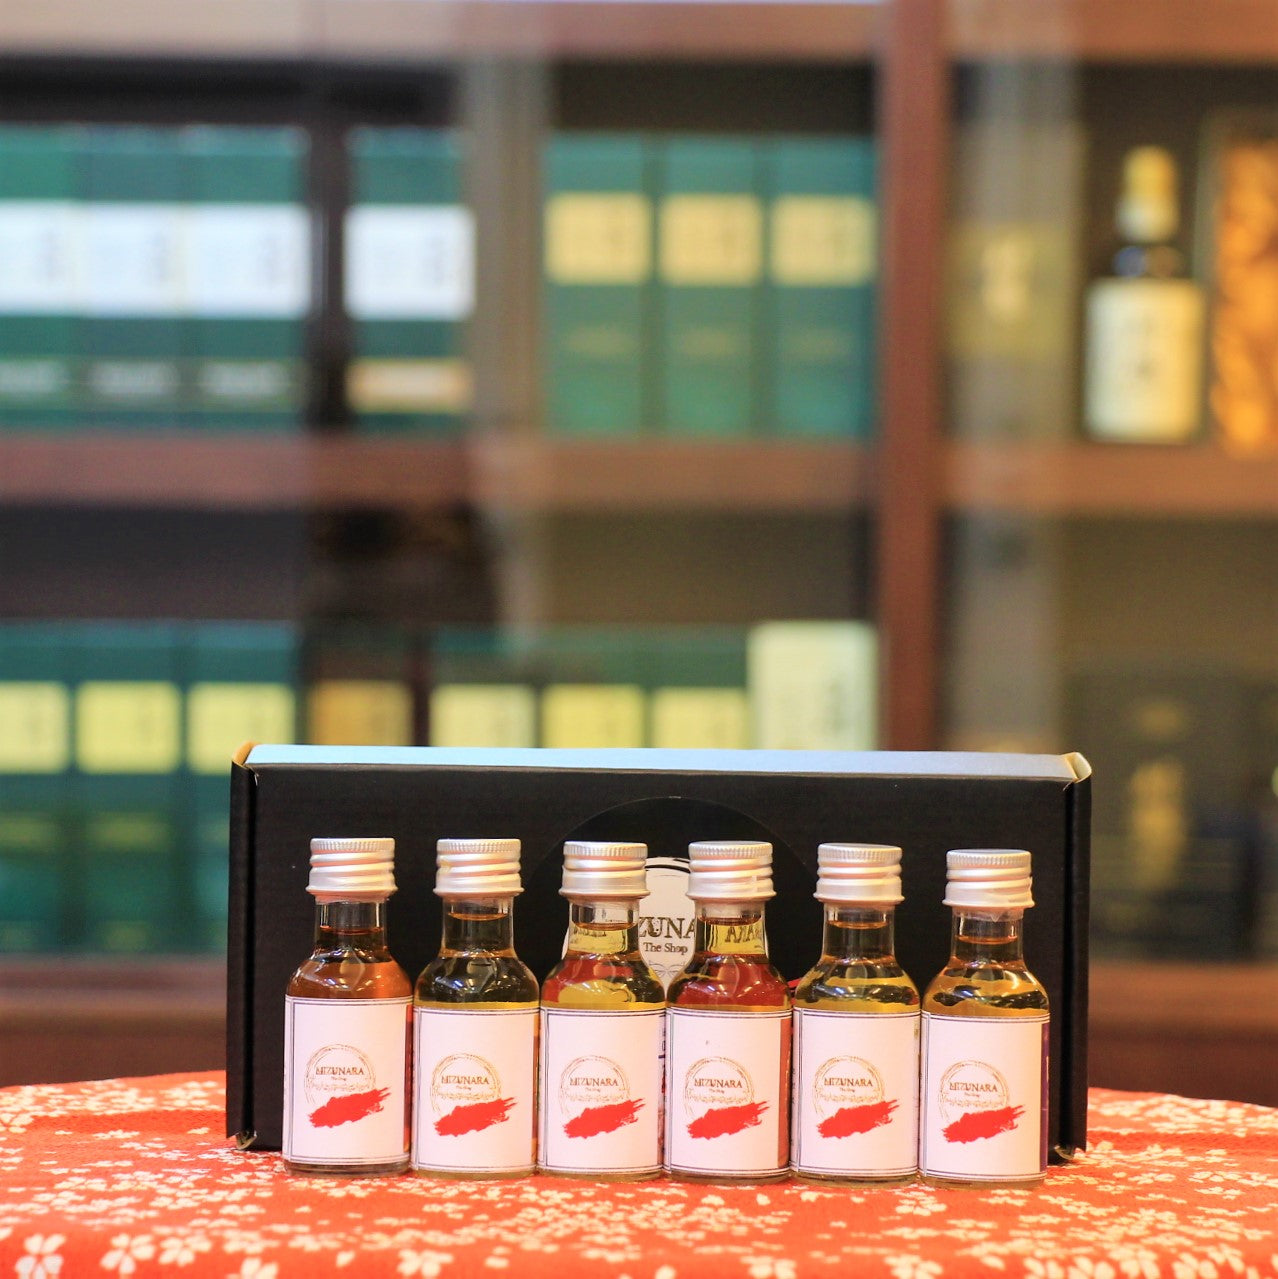 Hombo Shuzo Mars & Tsunuki Whisky (30 ml x 6) Tasting Gift Set B